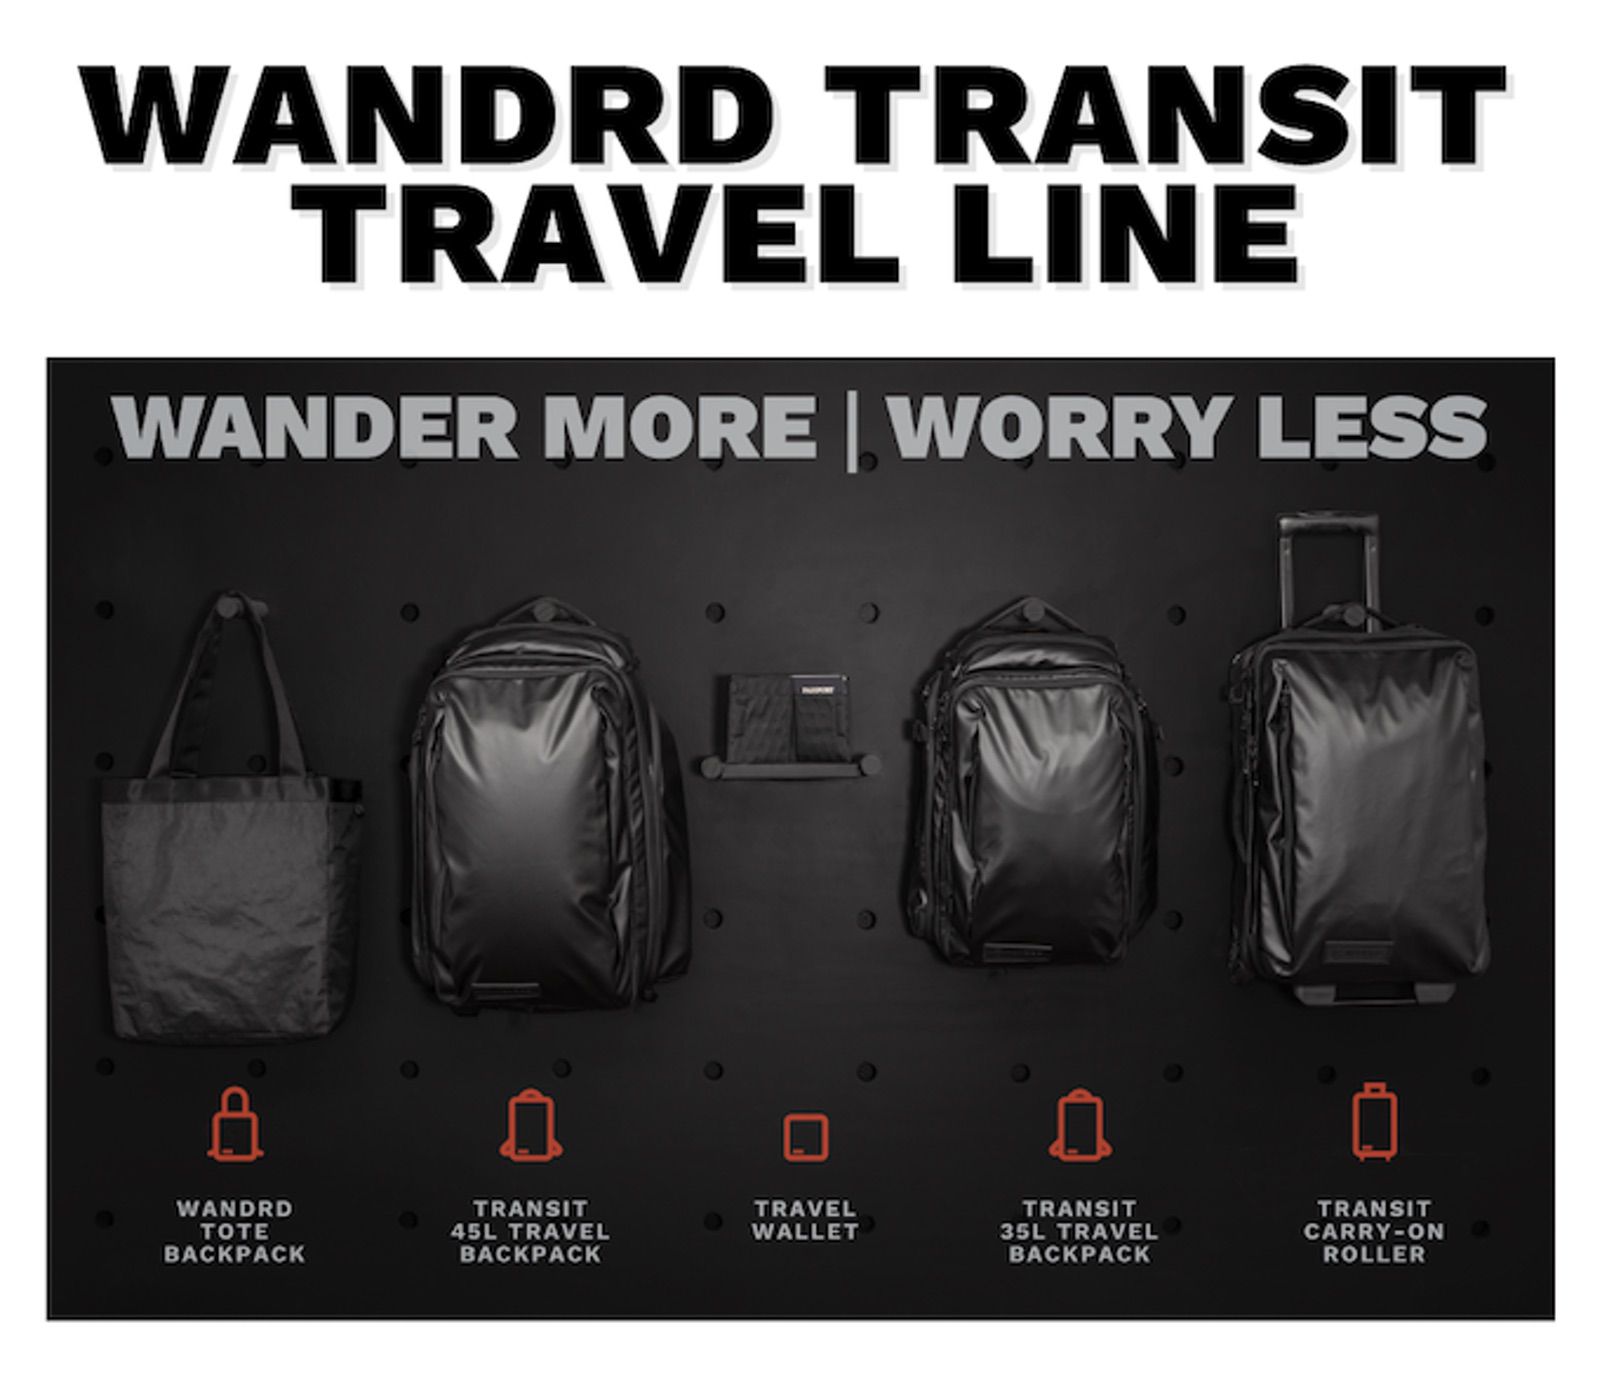 WANDRD Transit Travel Line on Kickstarter